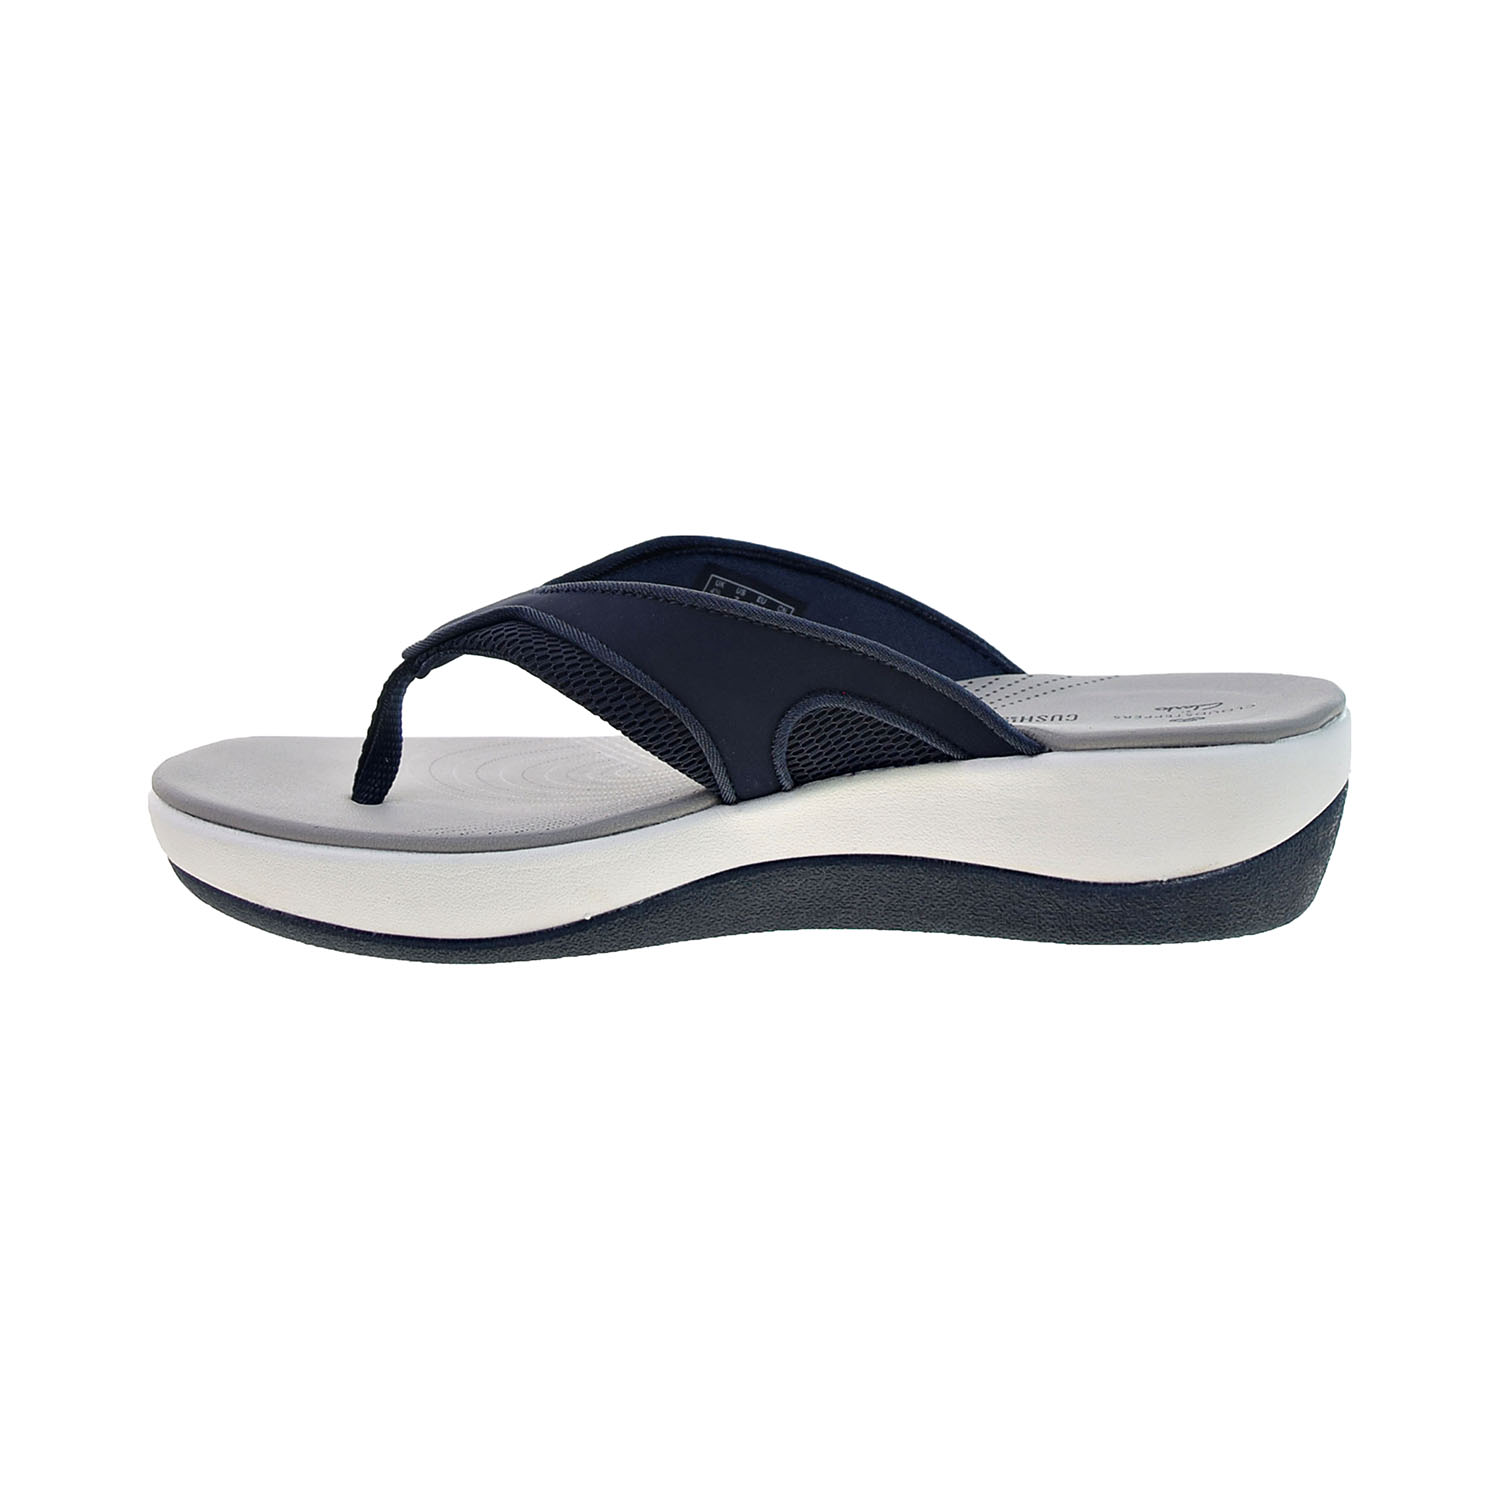 Clarks Arla Marina Women's Flip-Flop Sandals Navy 26127554 | eBay